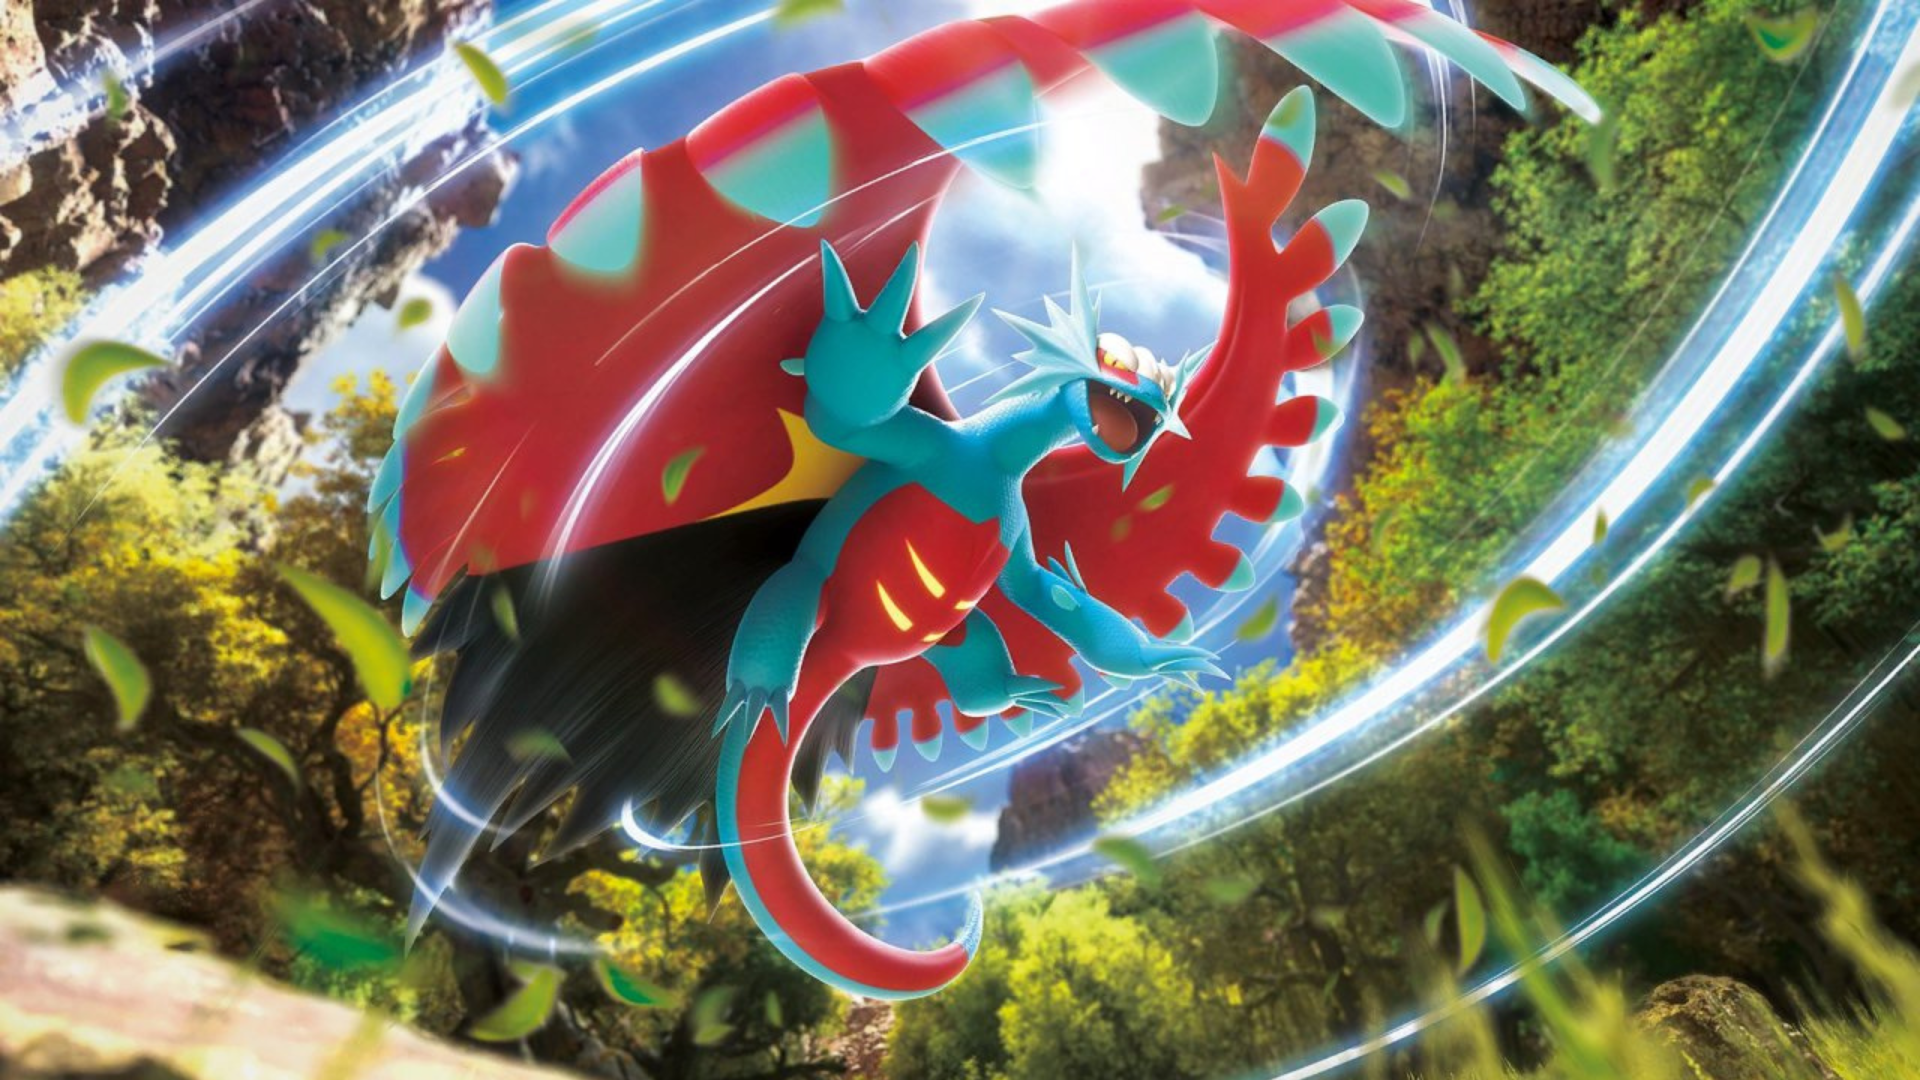 Scarlet & Violet—Paldean Fates: A Nova Expansão Shiny Pokémon